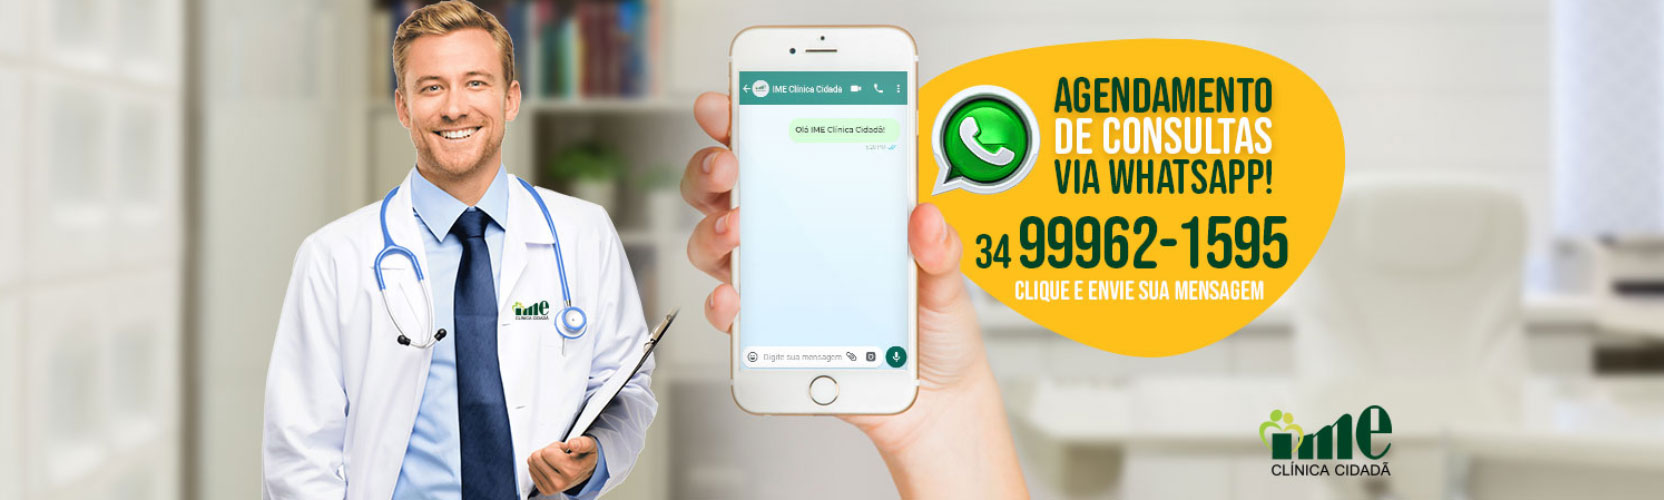 WhatsApp - IME - Clínica Cidadã